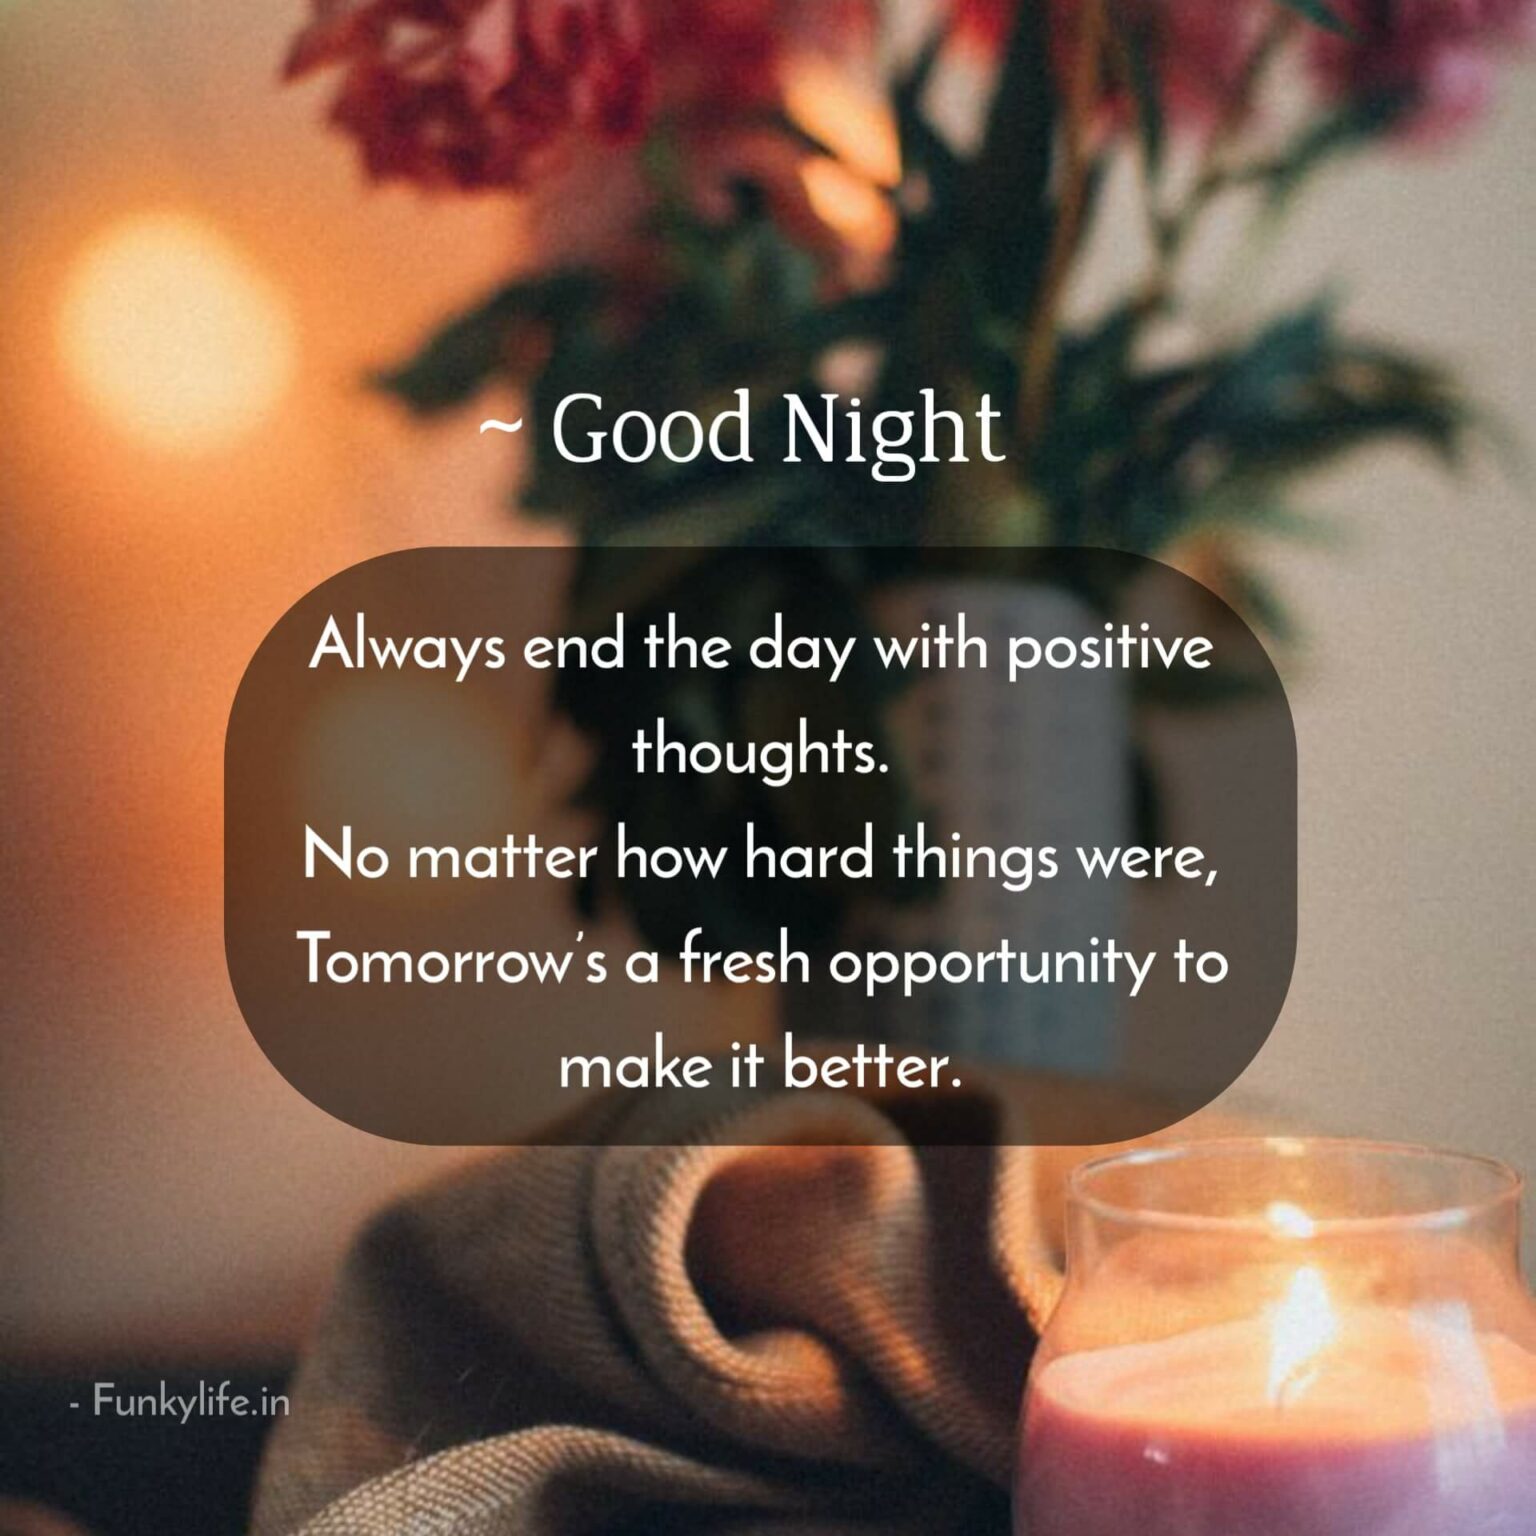 Good Night Quotes 6 1536x1536 